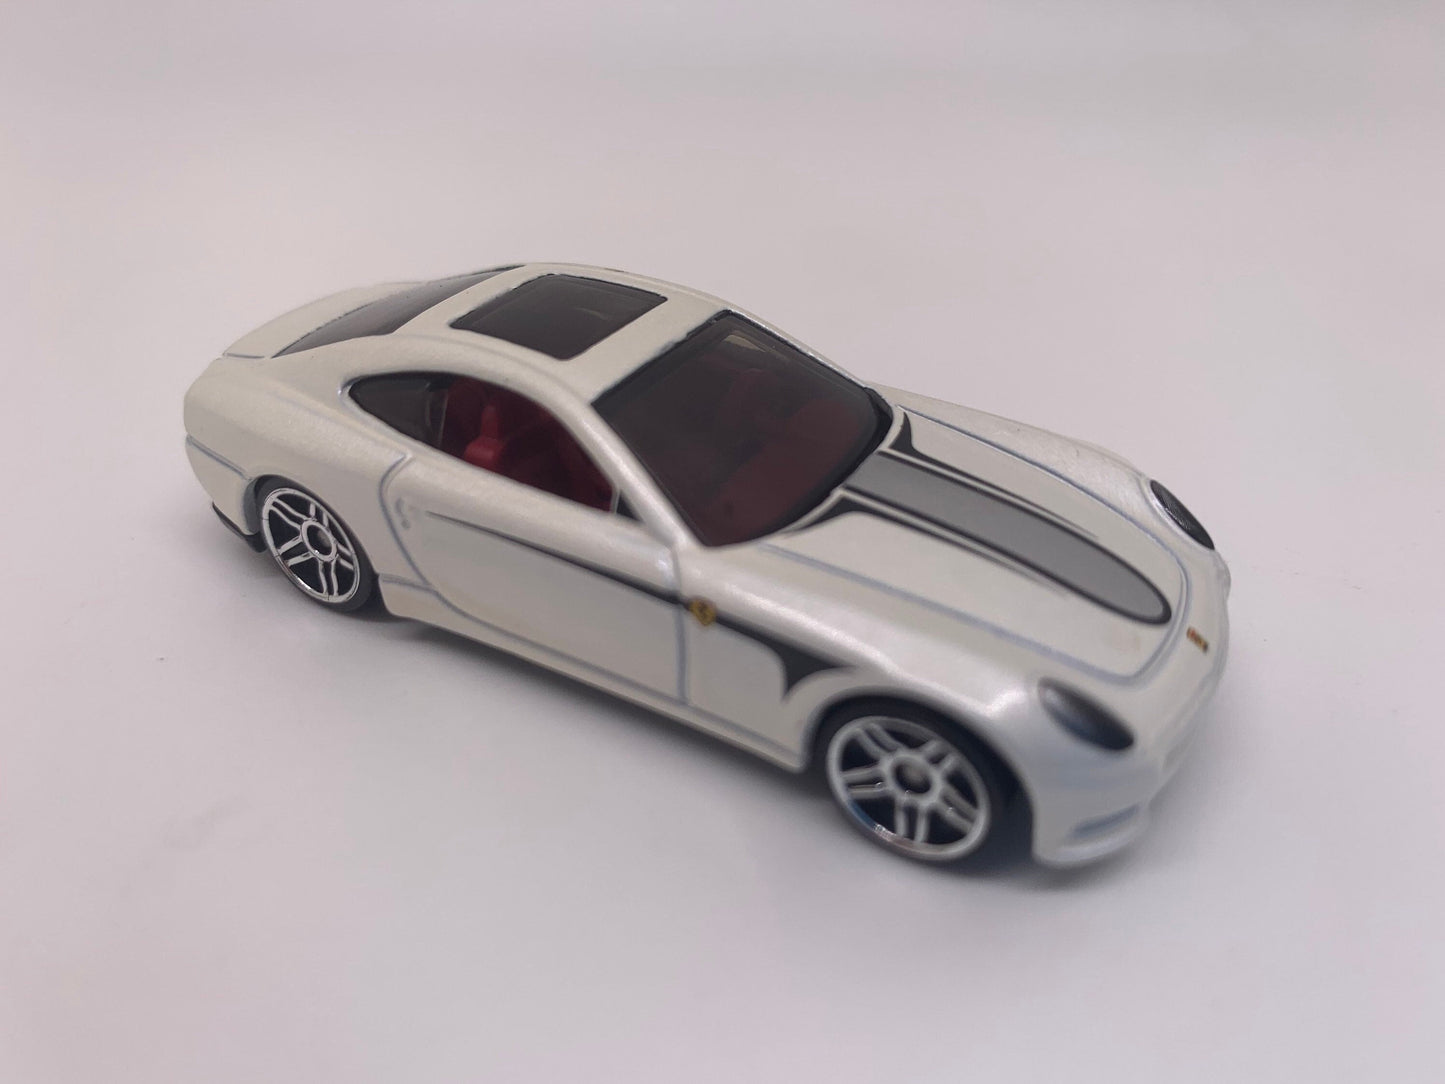 Hot Wheels Ferrari 612 Scaglietti Pearl White Perfect Birthday Gift Miniature Collectible Scale Model Toy Car